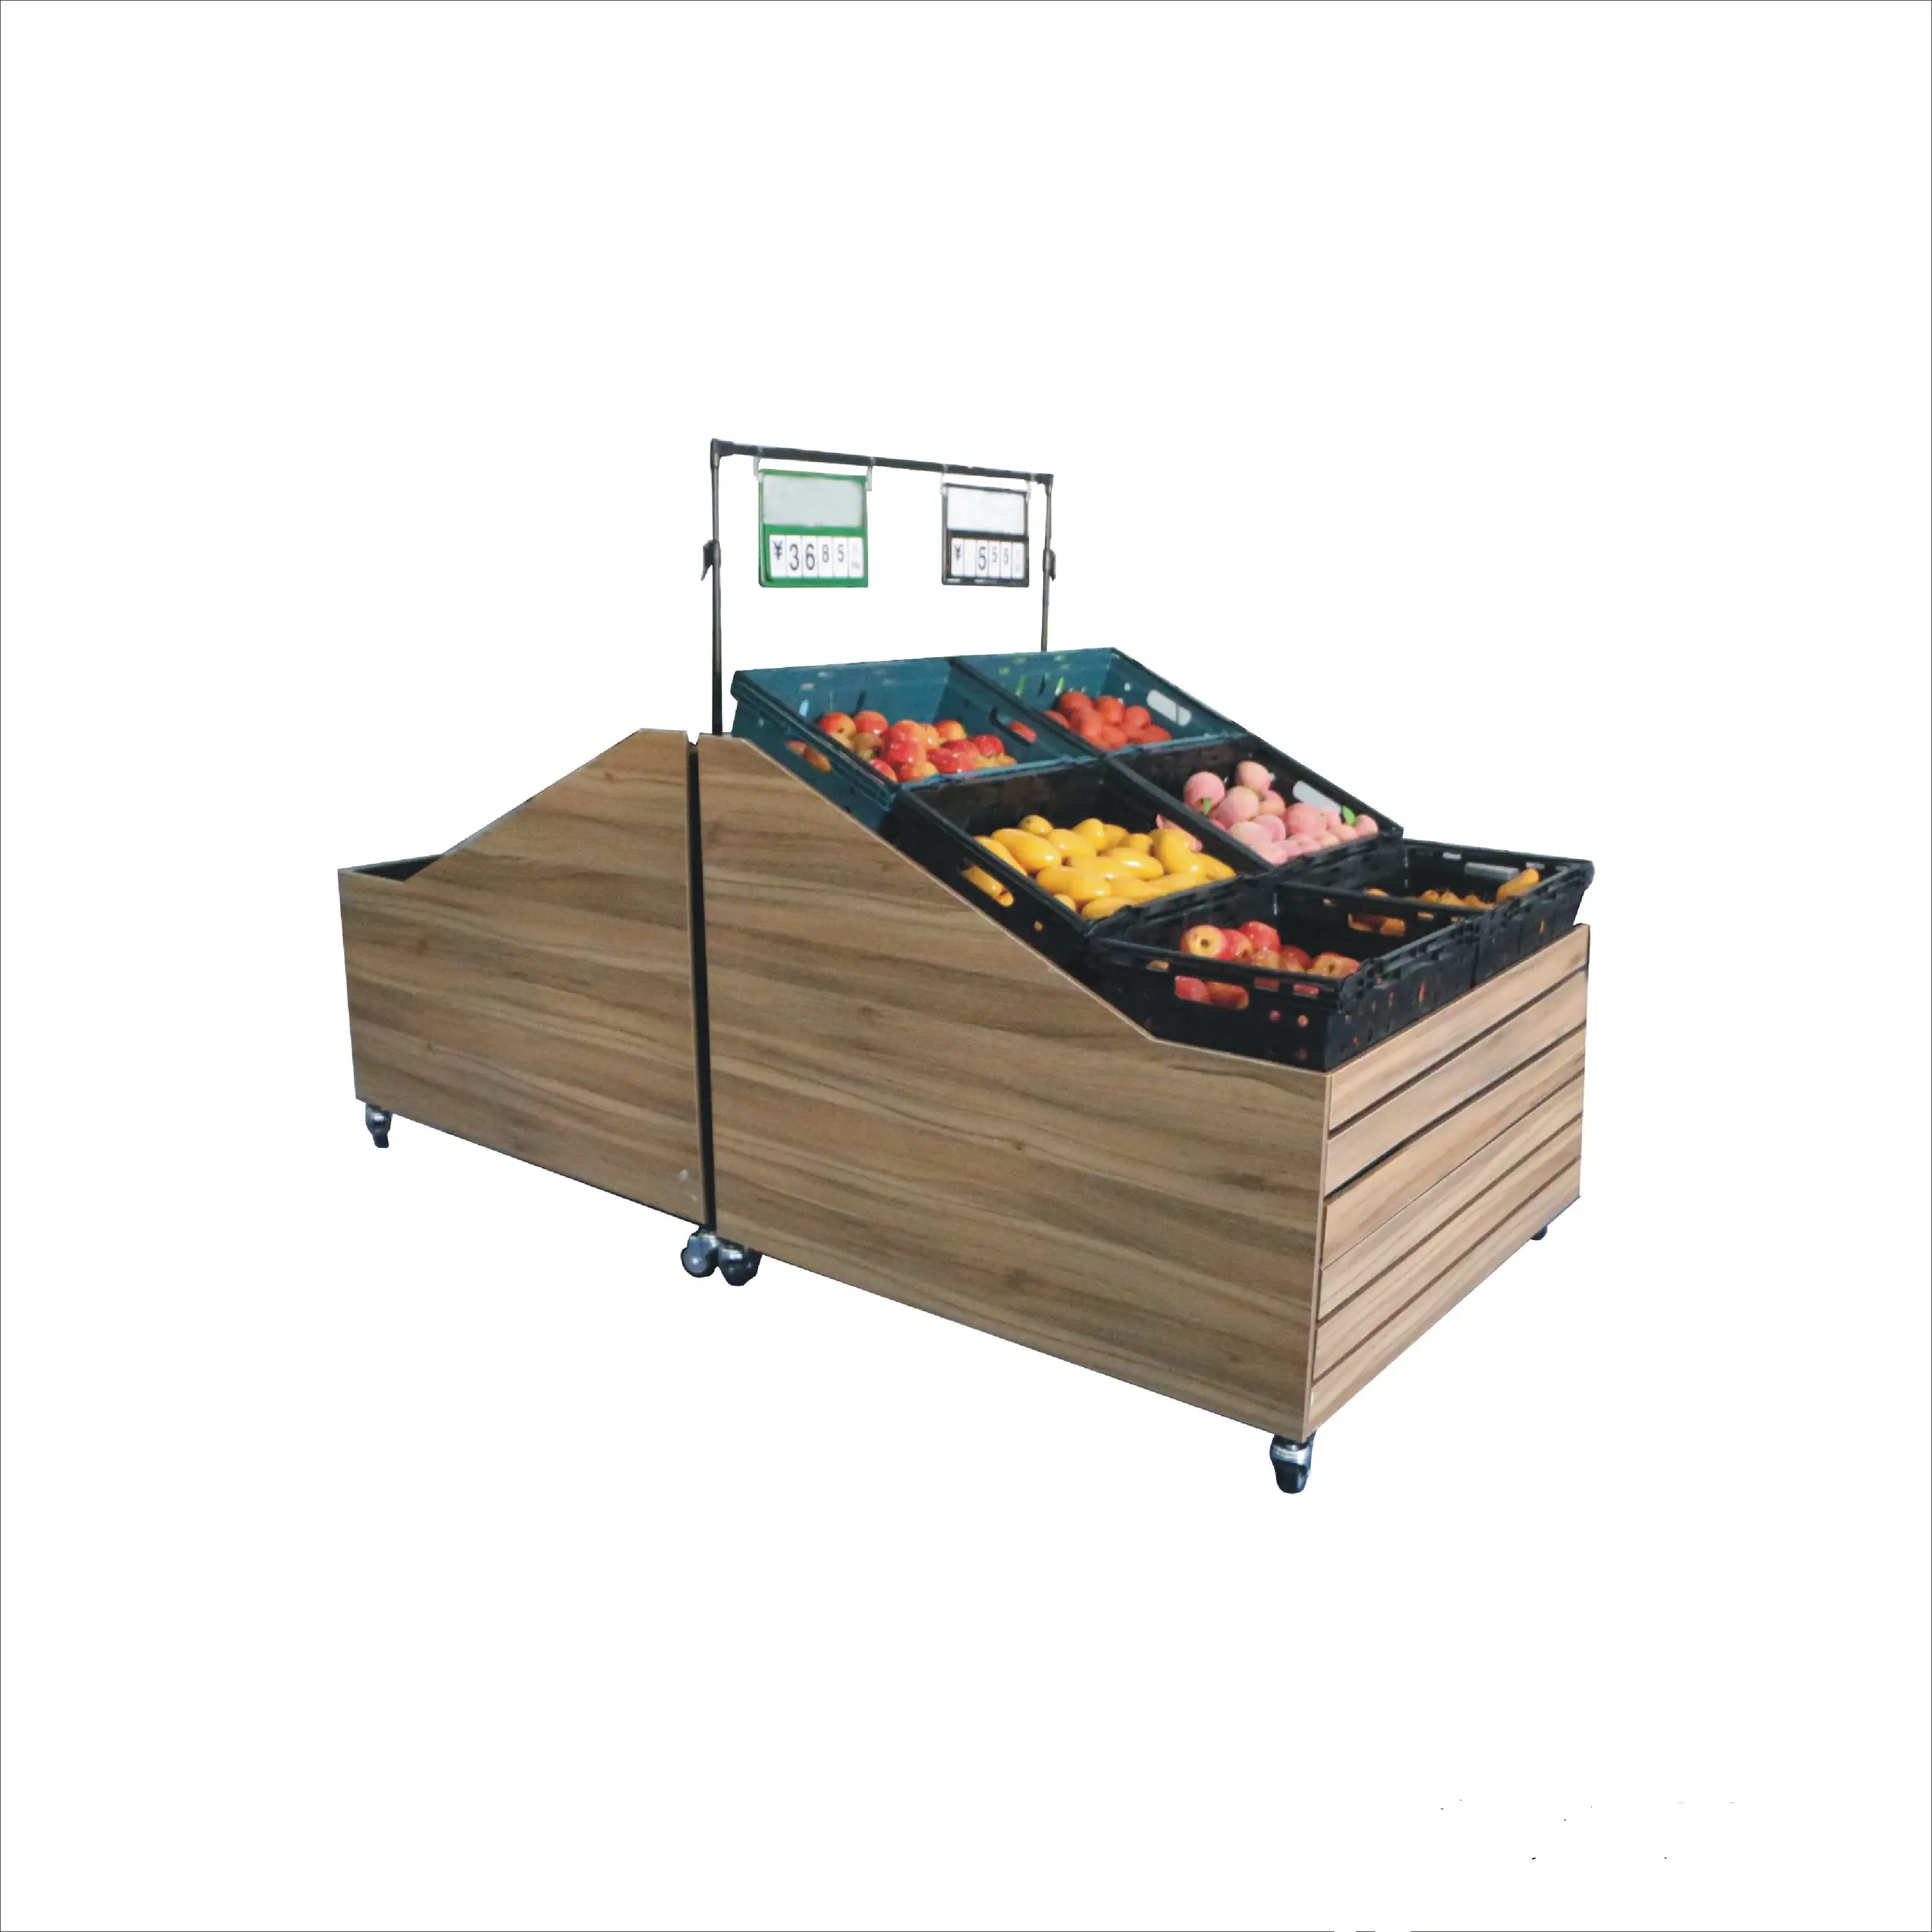 Supermarket Plastic Metal Steel Wooden Fruit and Vegetable Display Stands Rack Shelf Counter